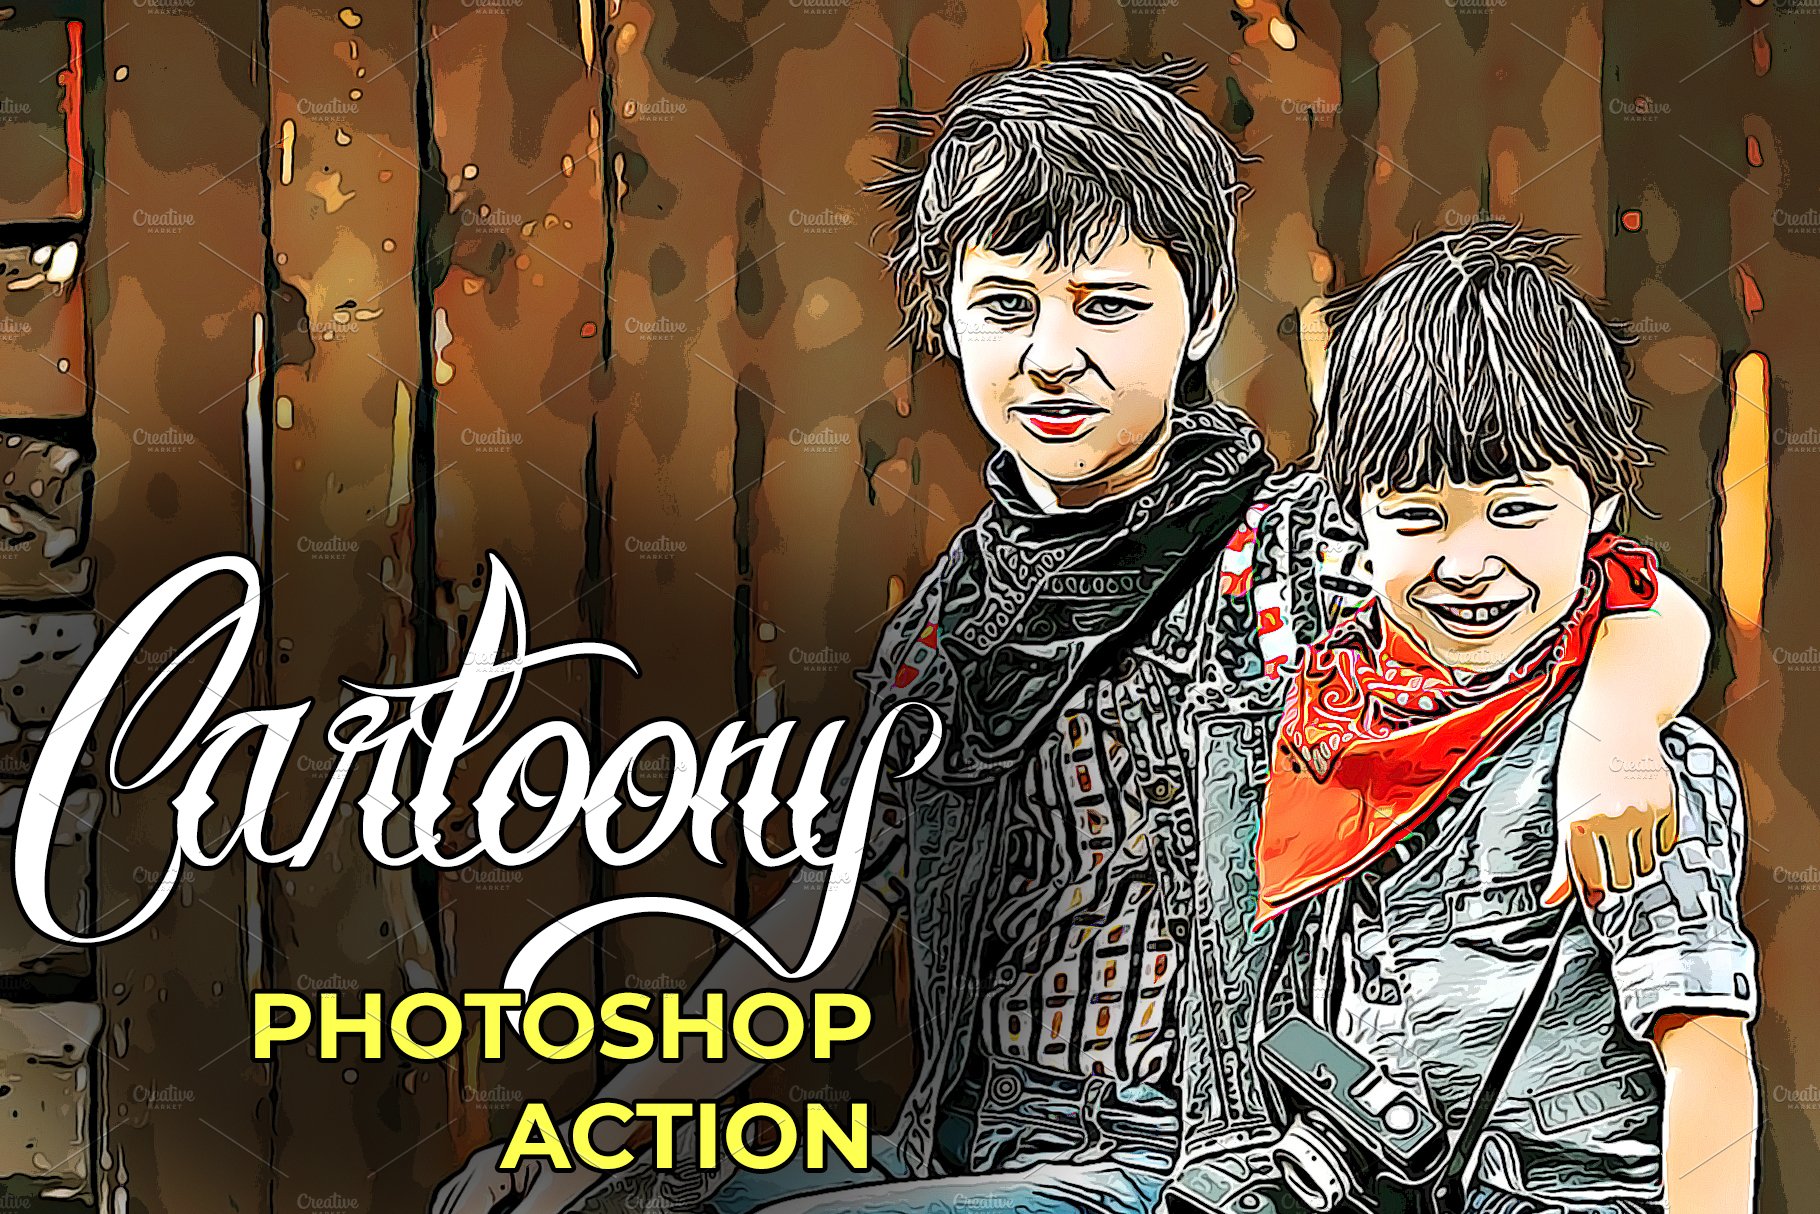 Cartoony Photoshop Actioncover image.